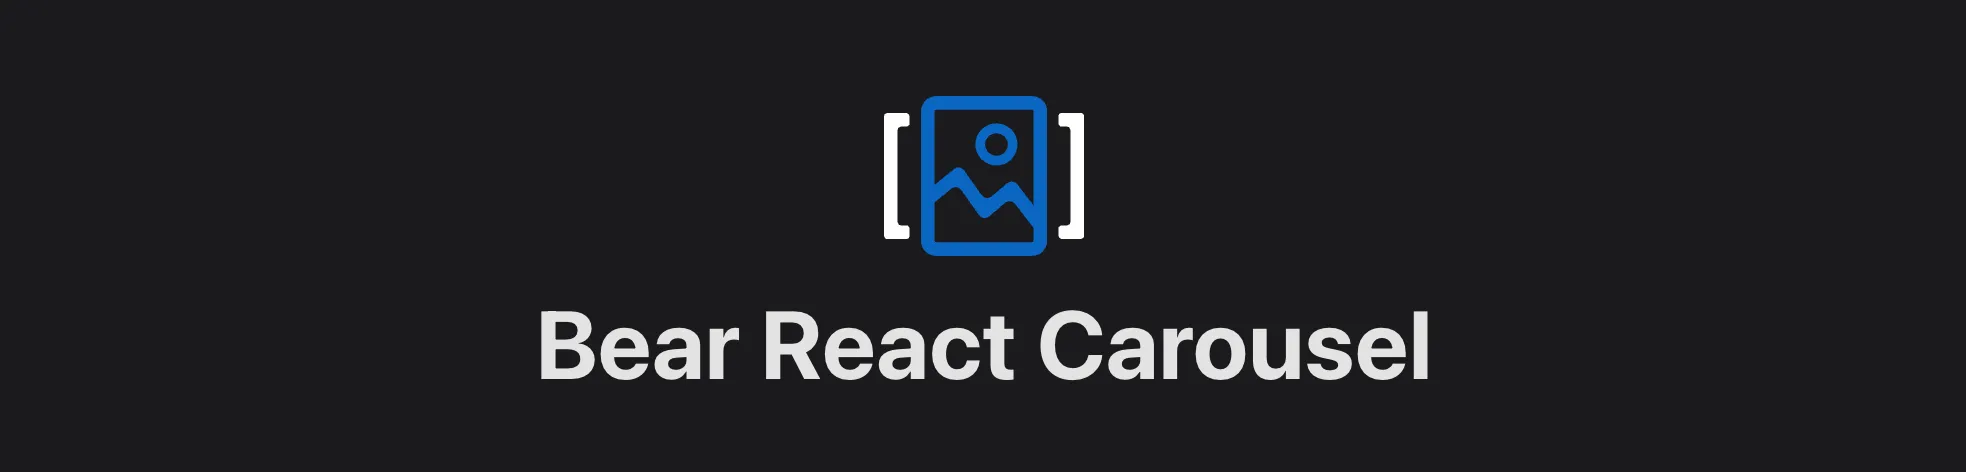 Bear React Carousel Logo